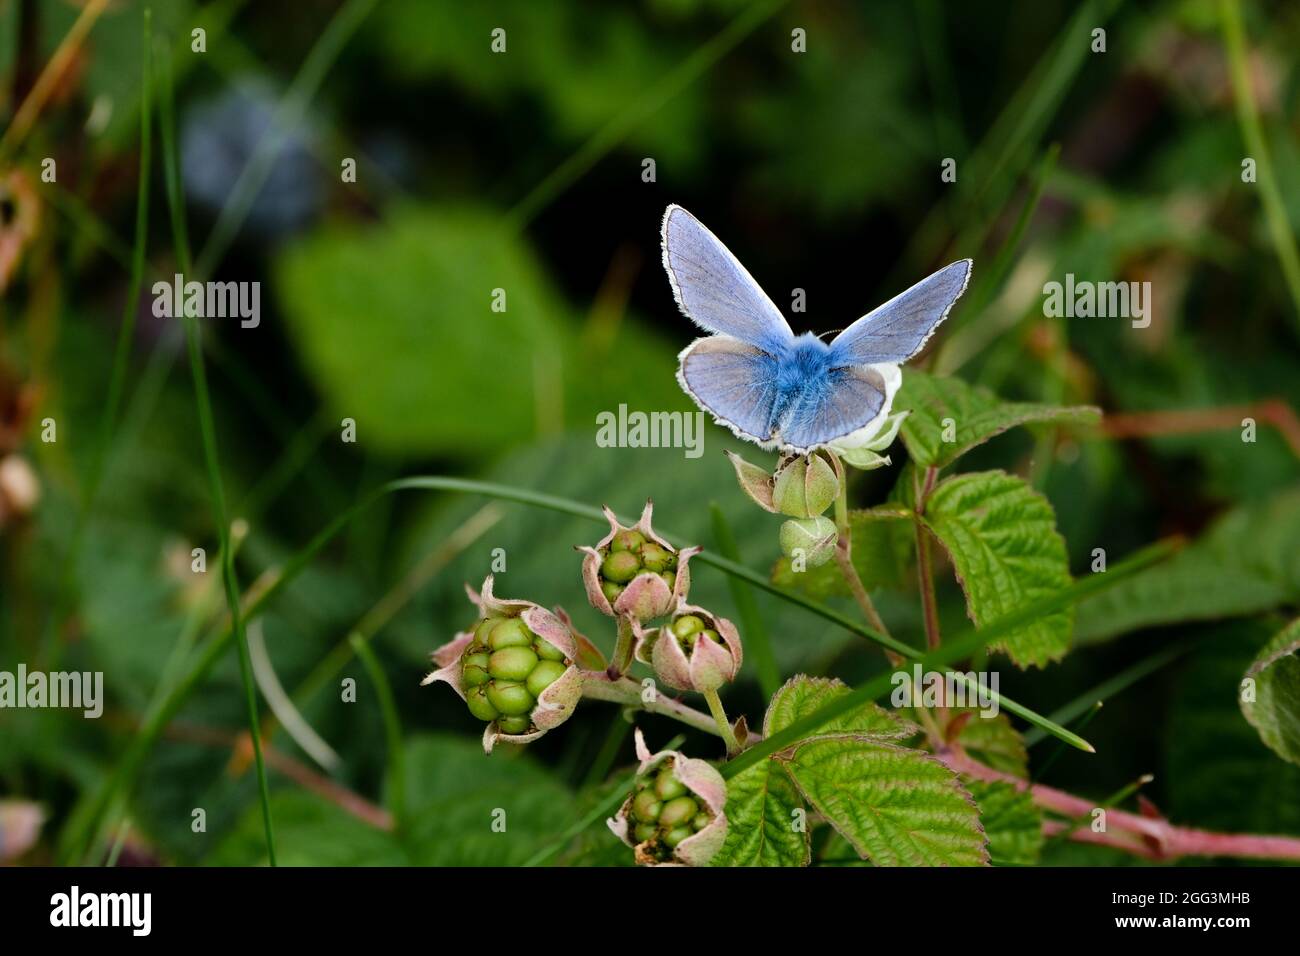 A Common Blue Butterfly settled on vegetation. Stock Photo